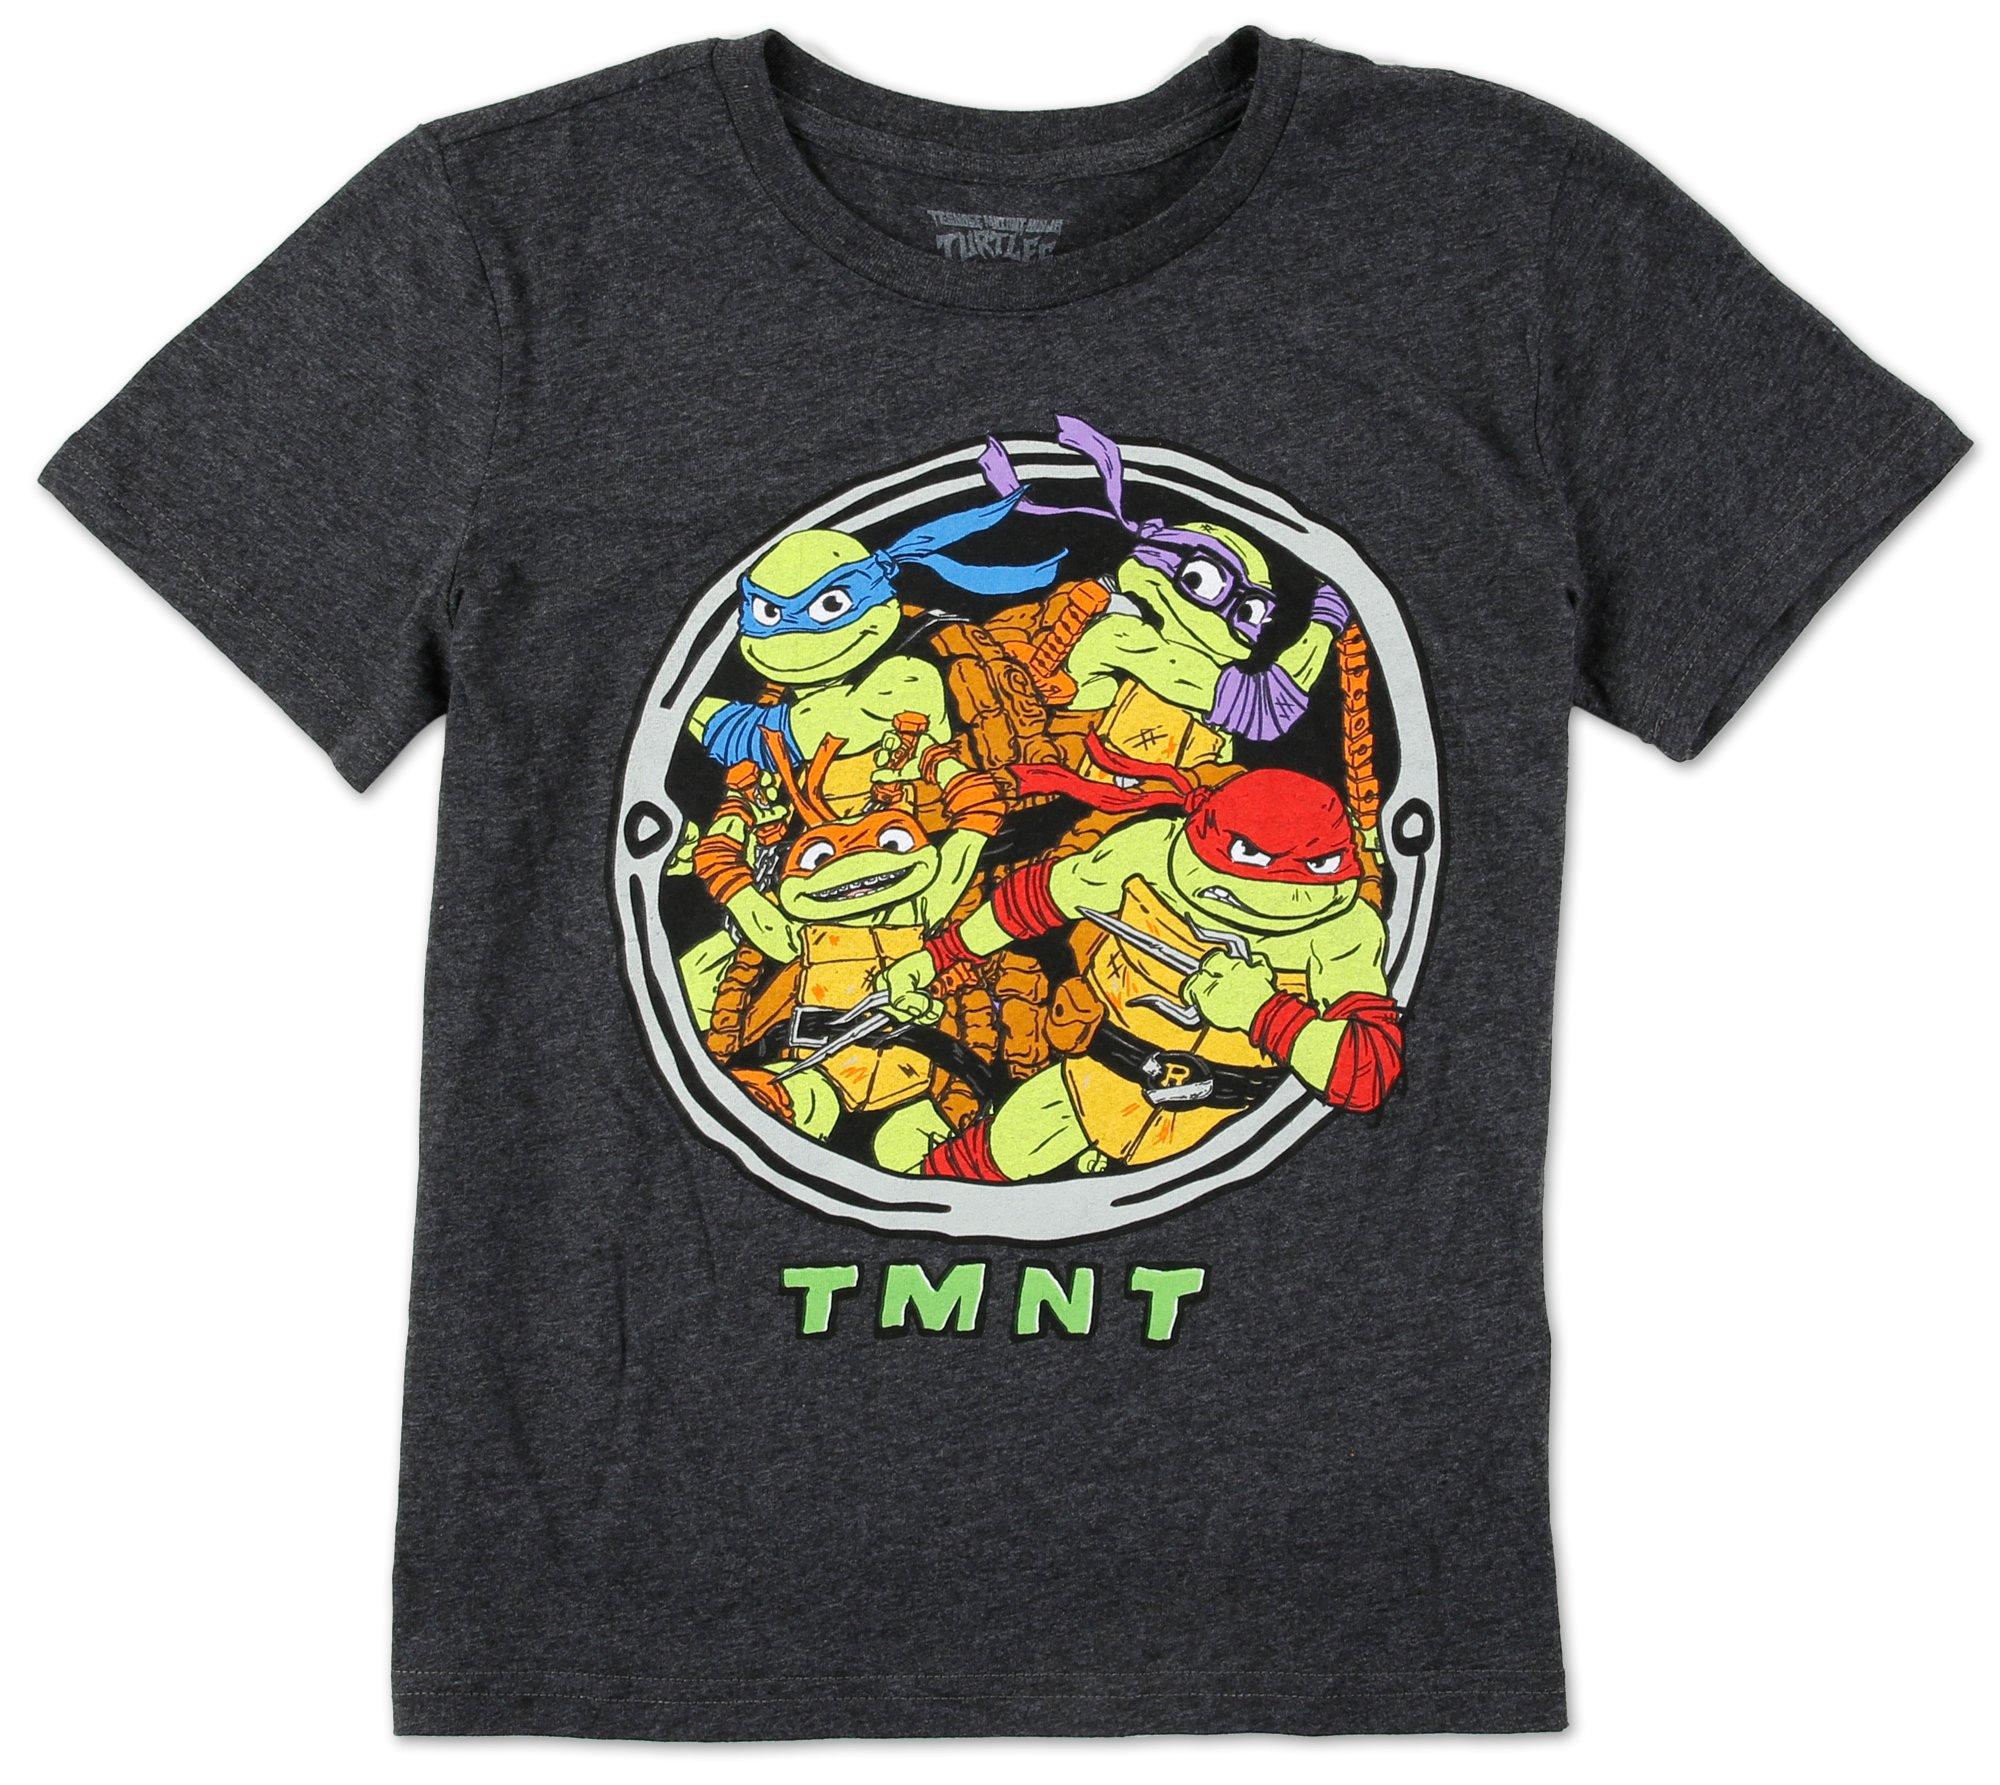 Boys TMNT Graphic T-Shirt - Grey